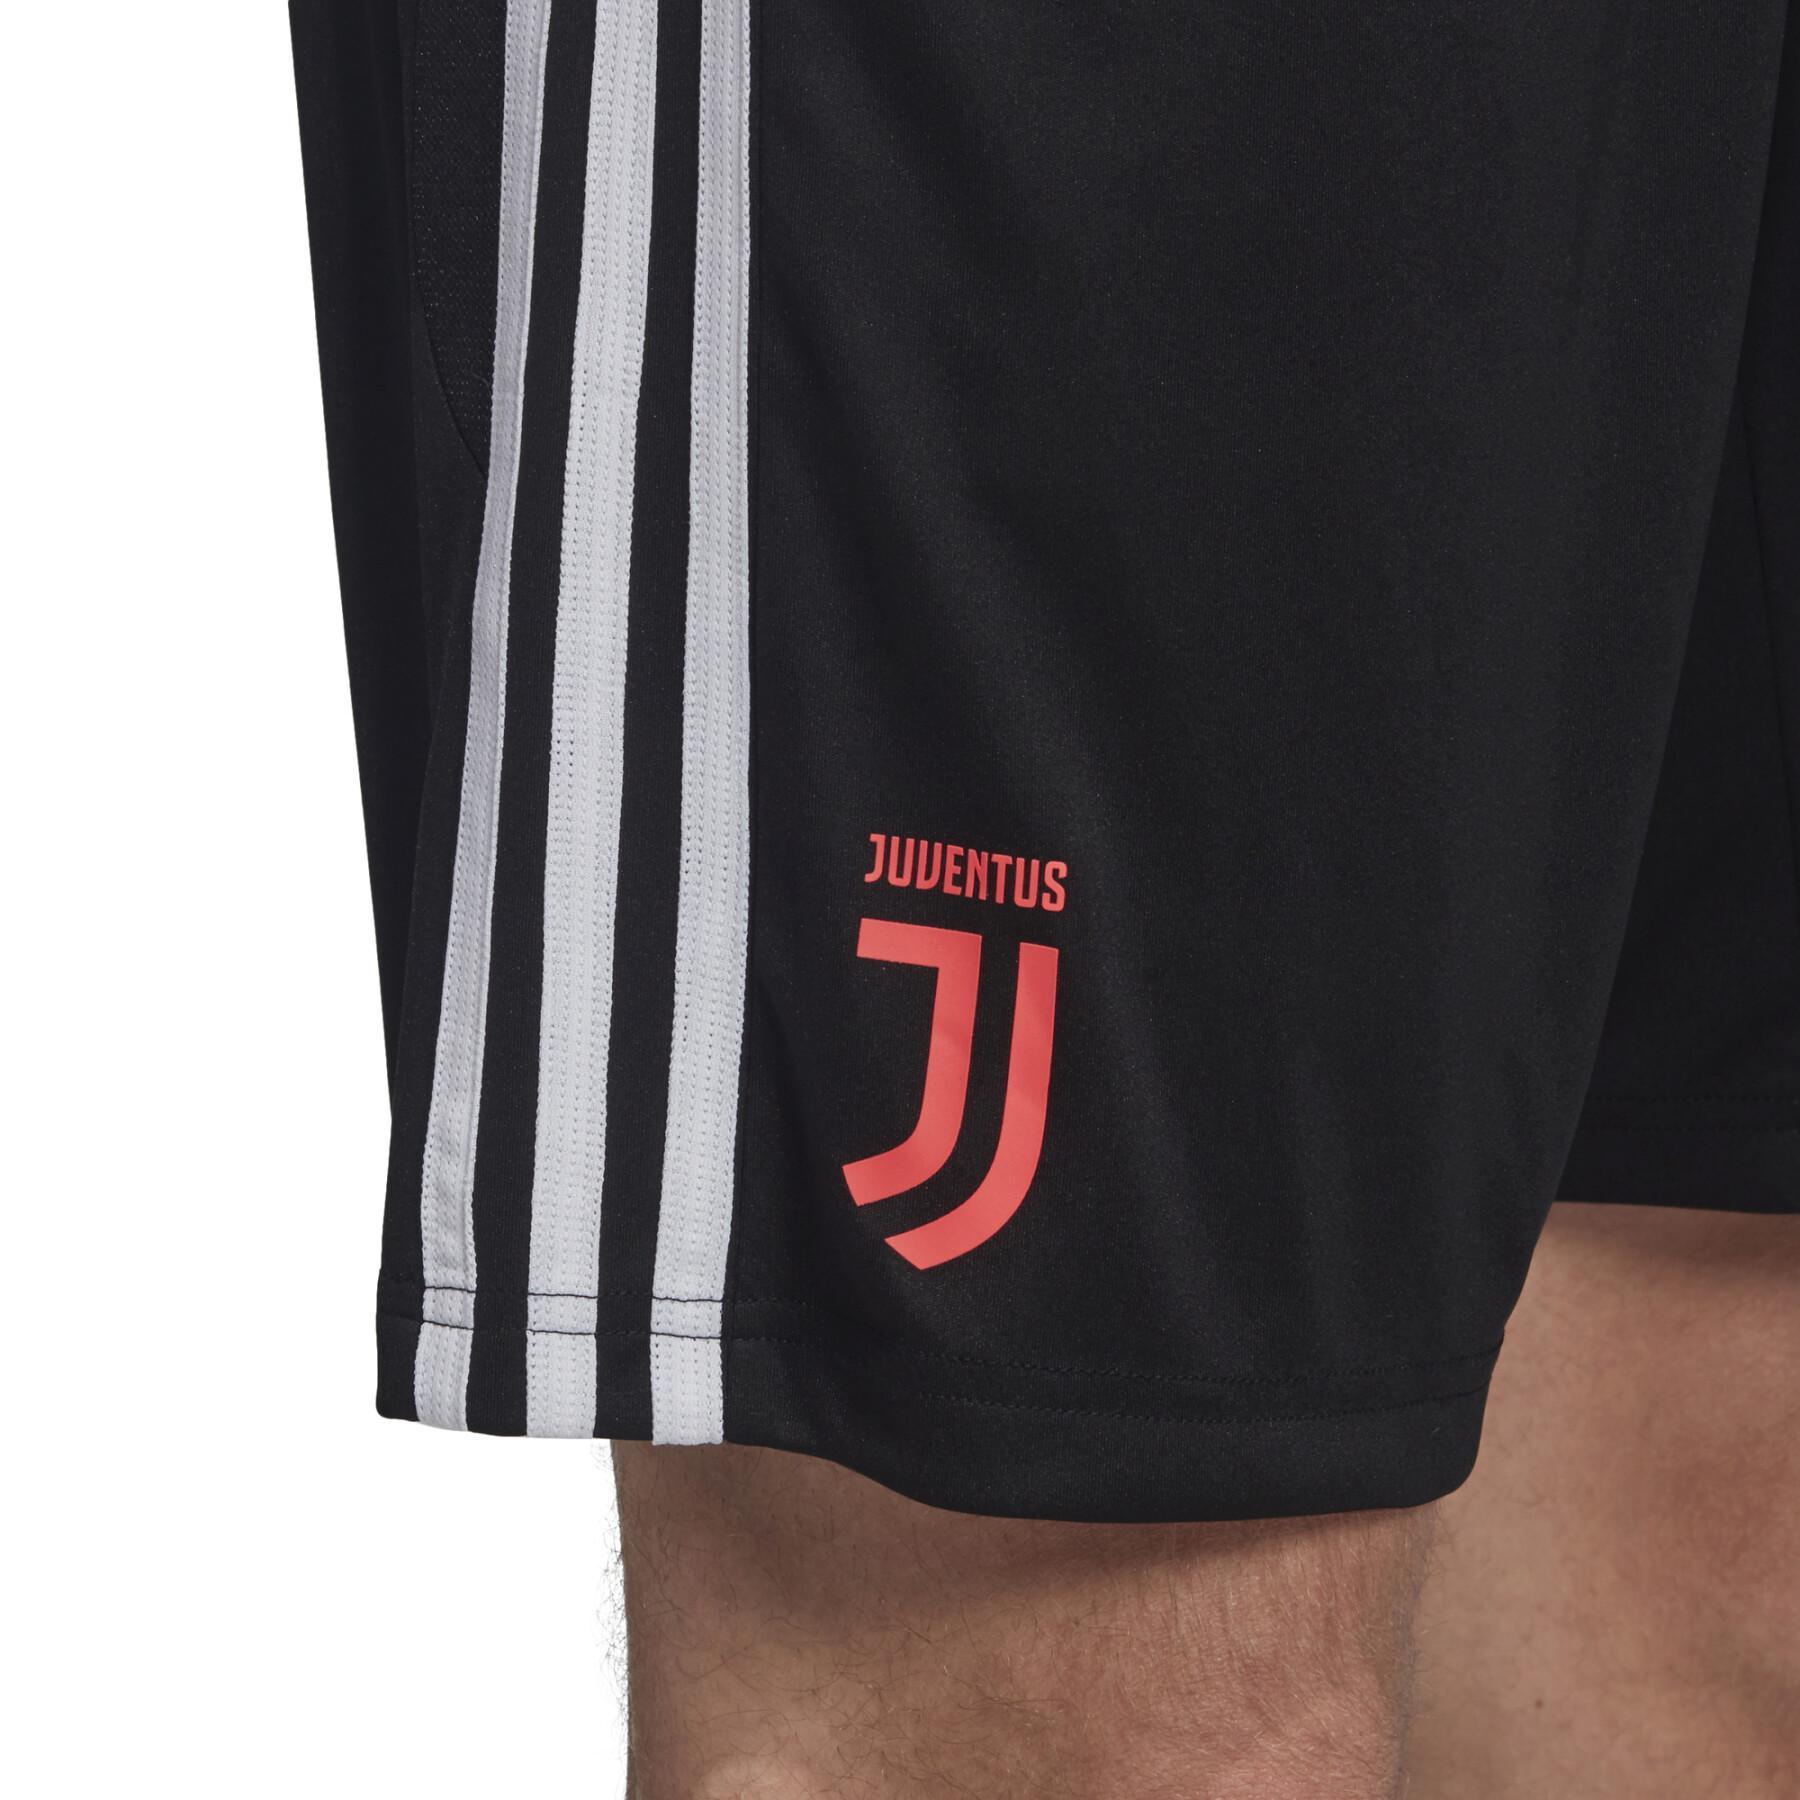 Formación breve Juventus 2019/20